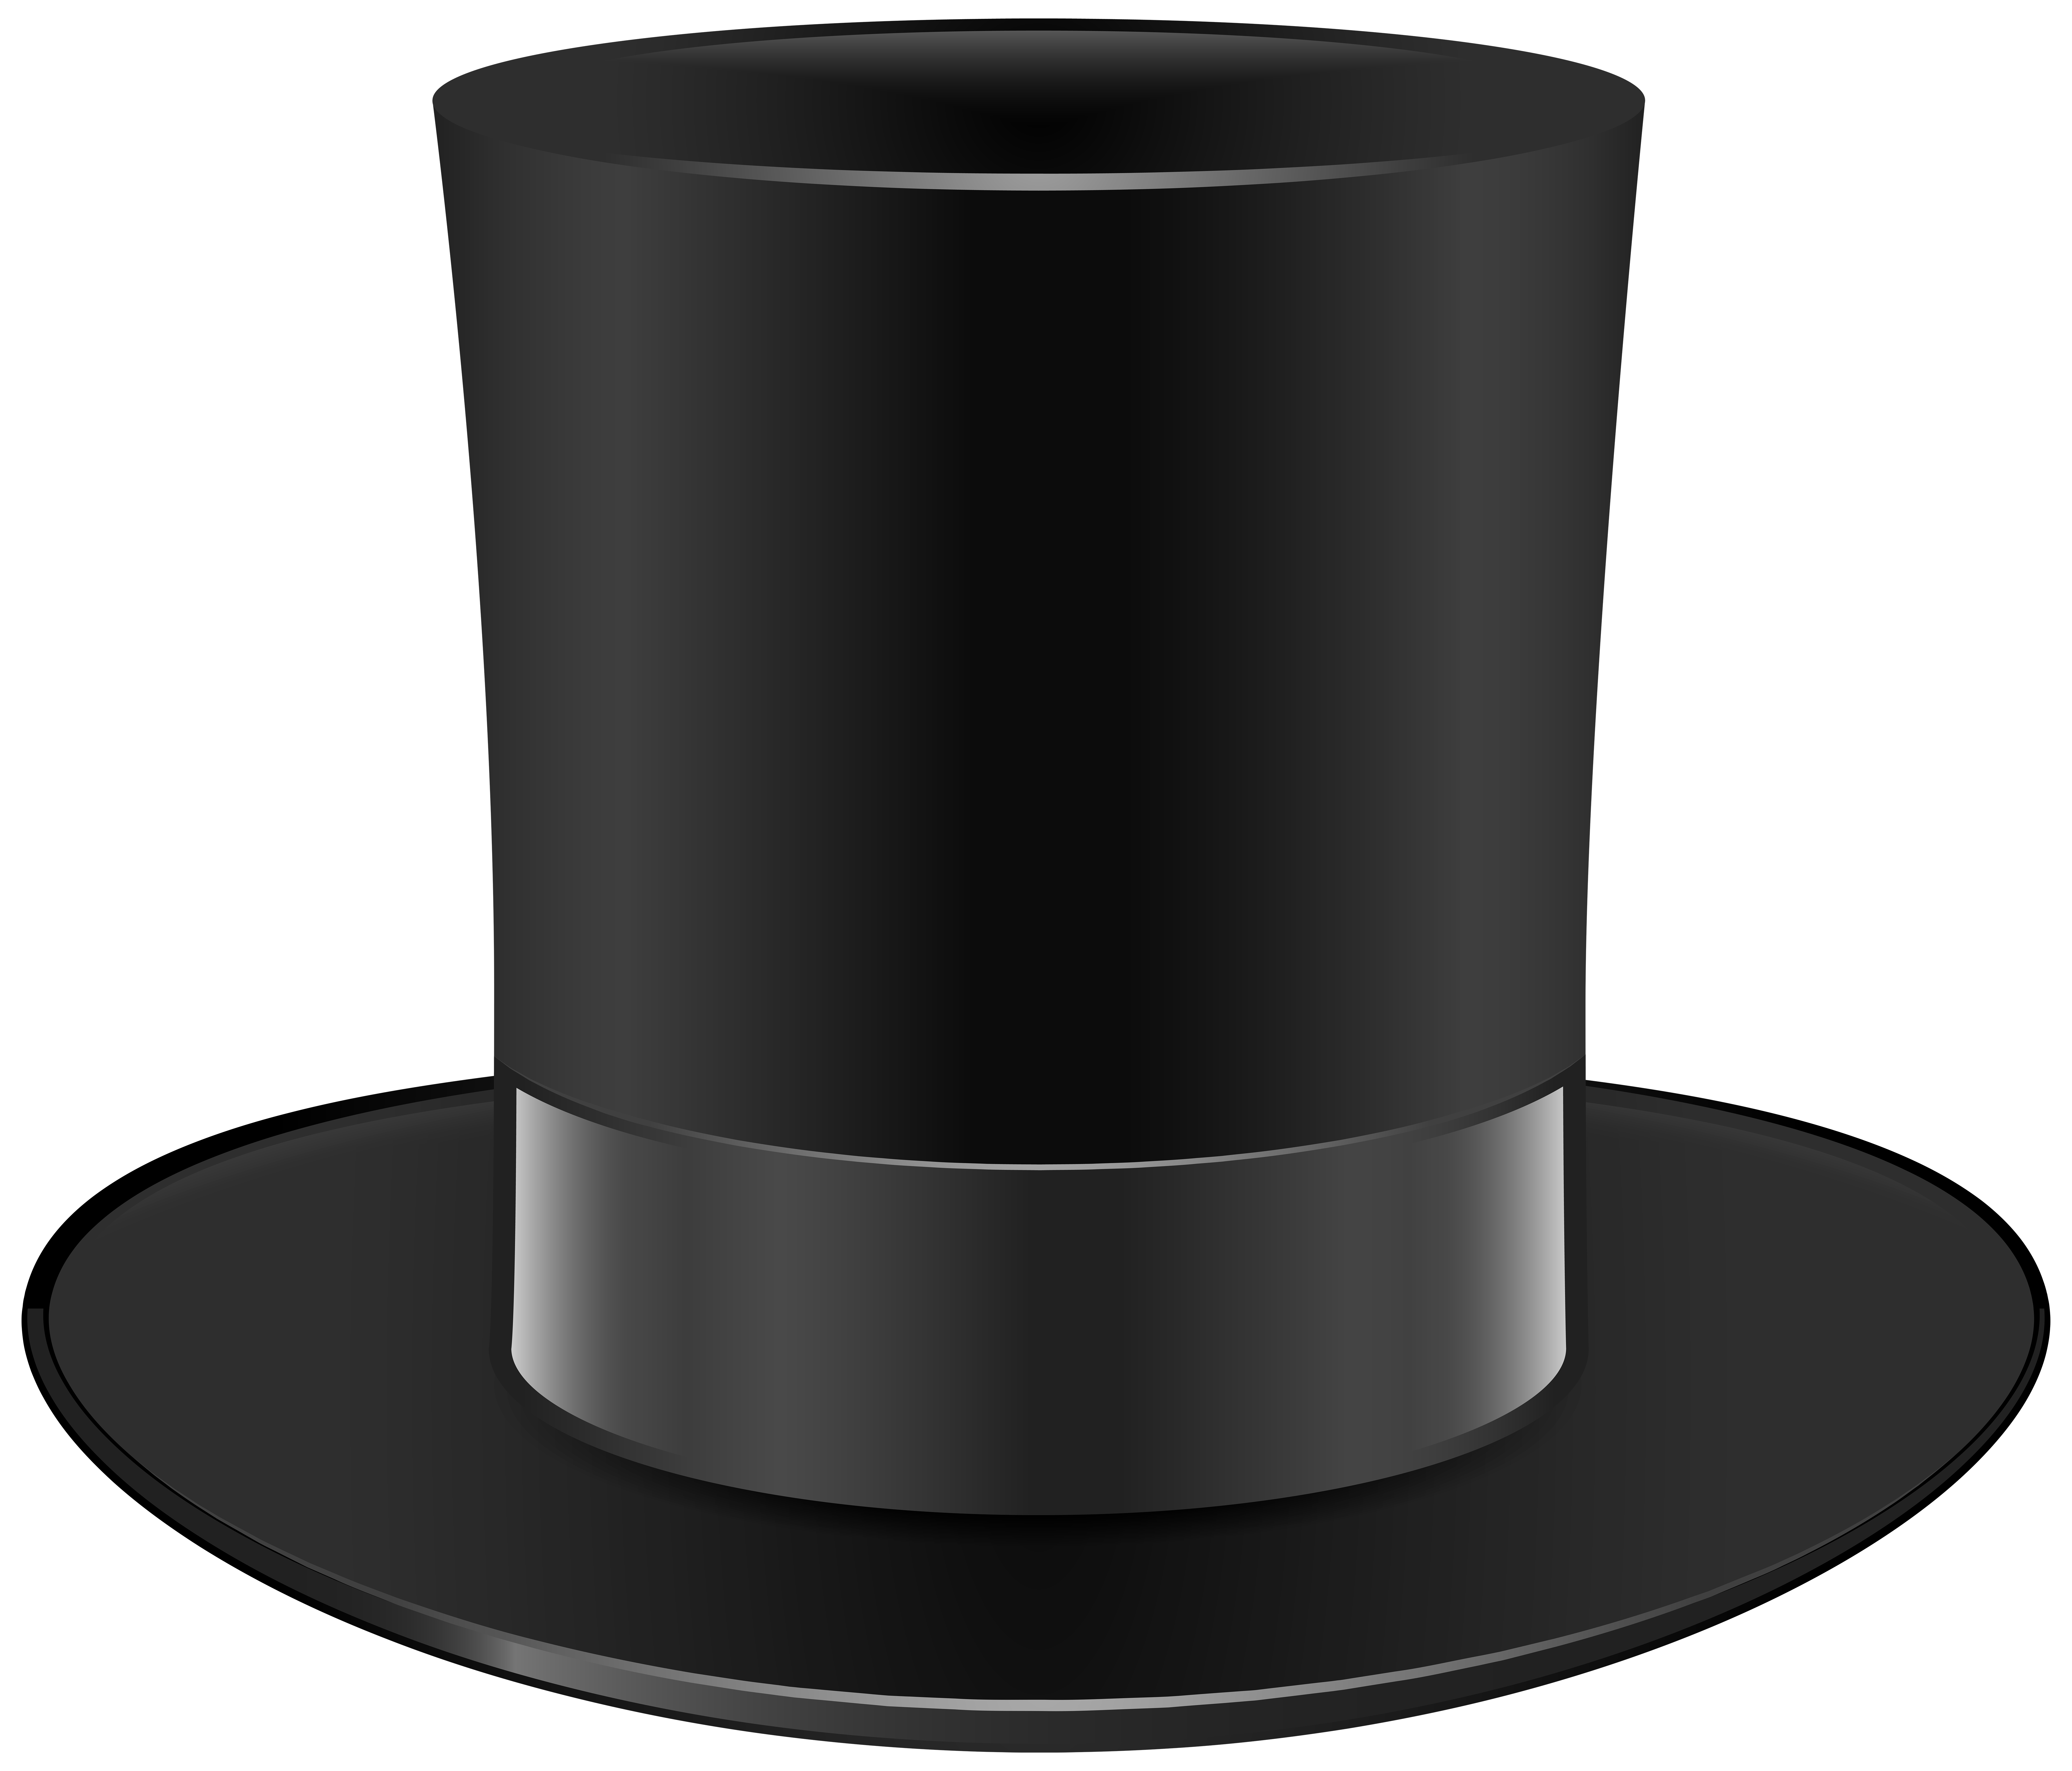 hat clip art black and white